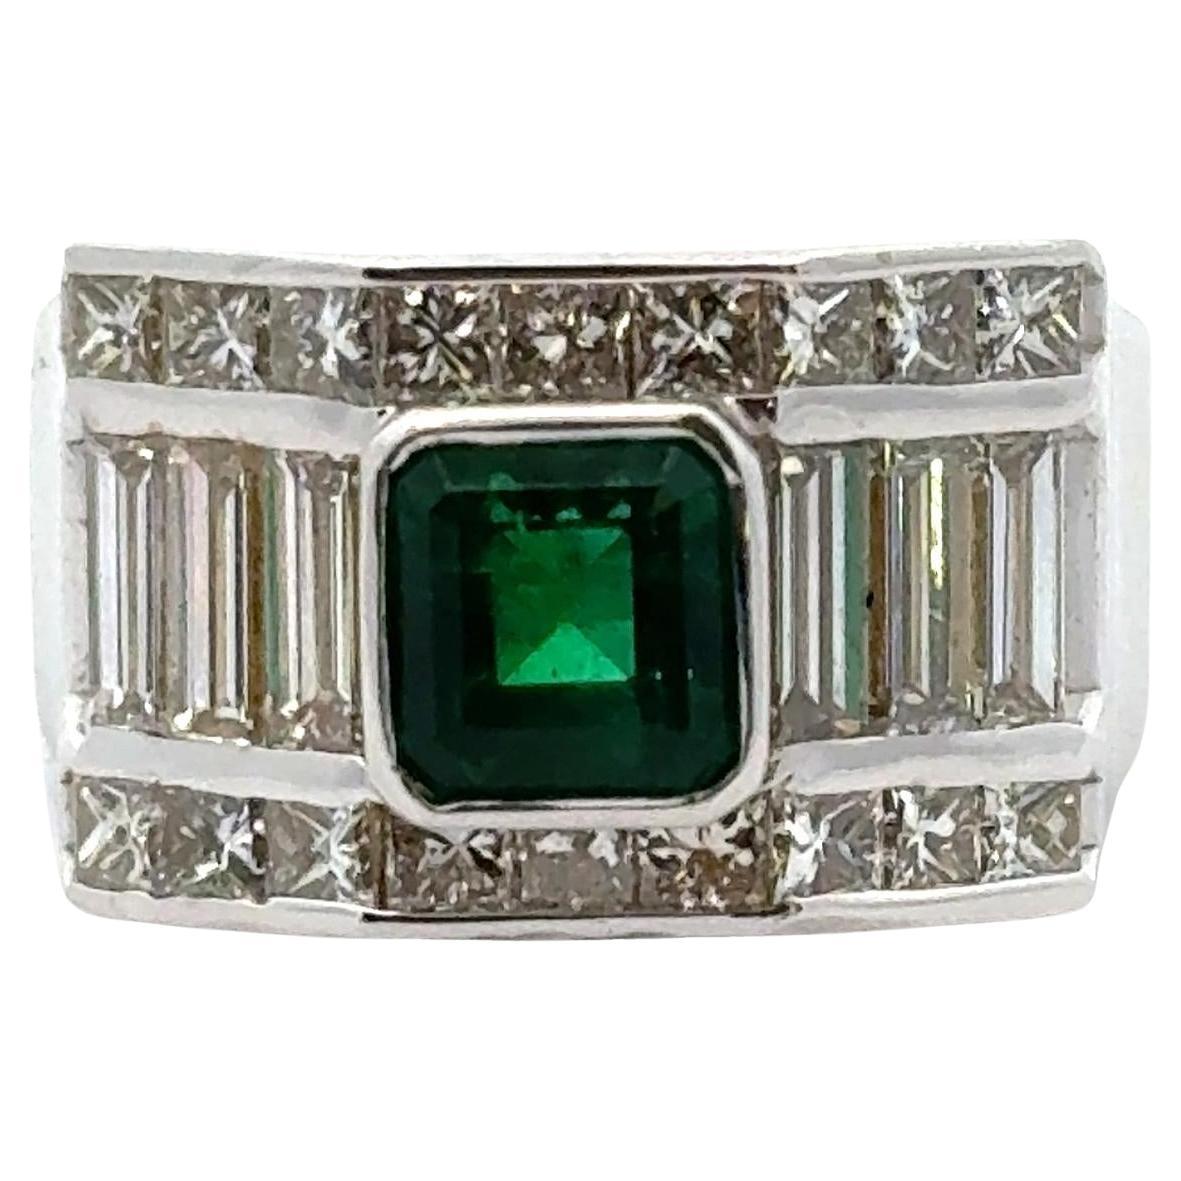 Modern Emerald Diamond 18 Karat White Gold Wide Band Ring